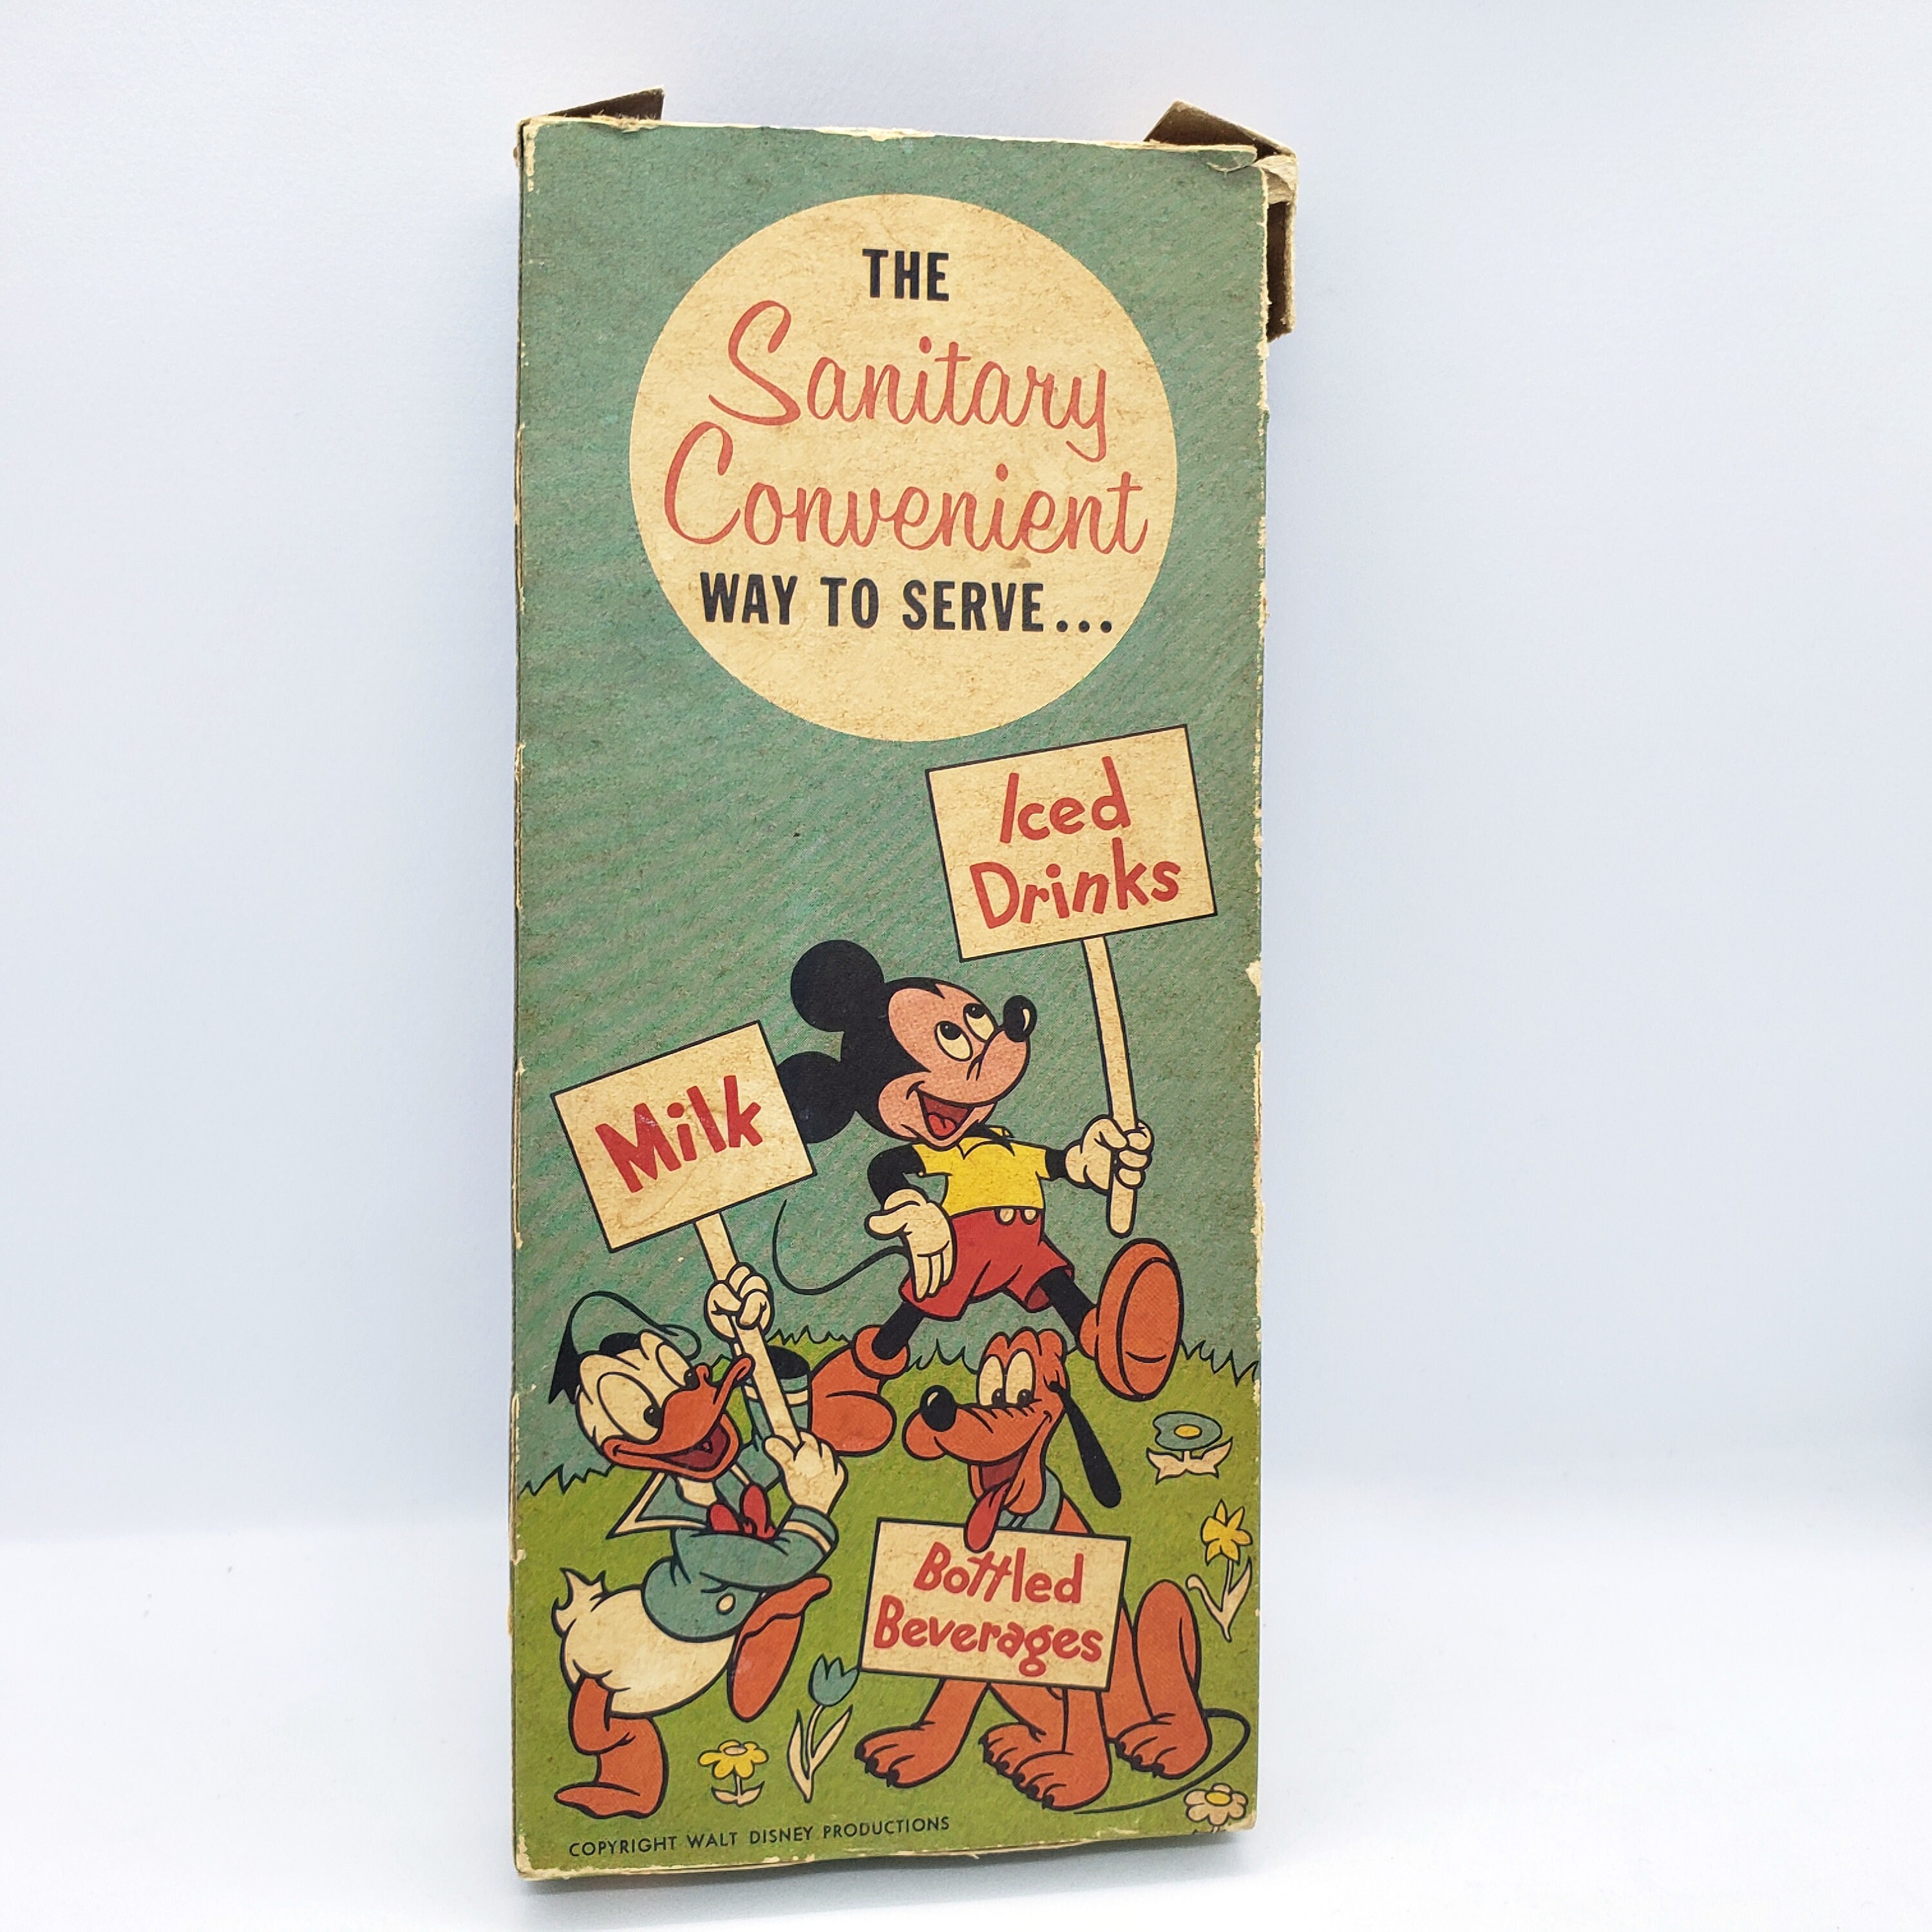 Disney Mickey Mouse original box: 100 paper straws: 50s - Ruby Lane